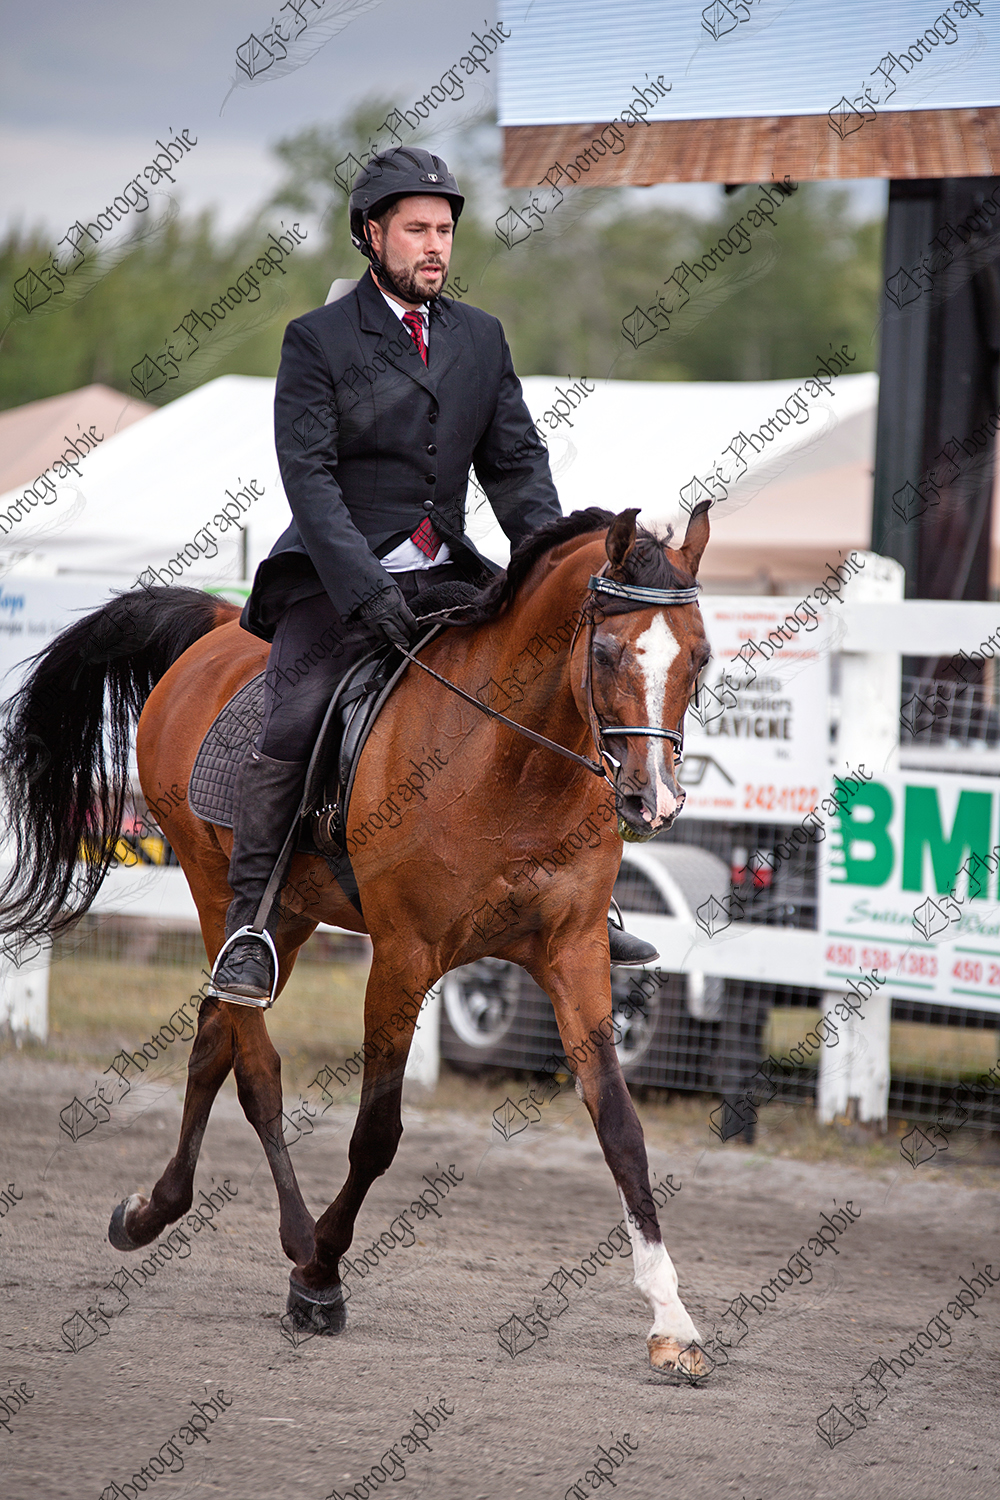 elze_photo_5597_concours_hippique_cheval_rider_horse_competition